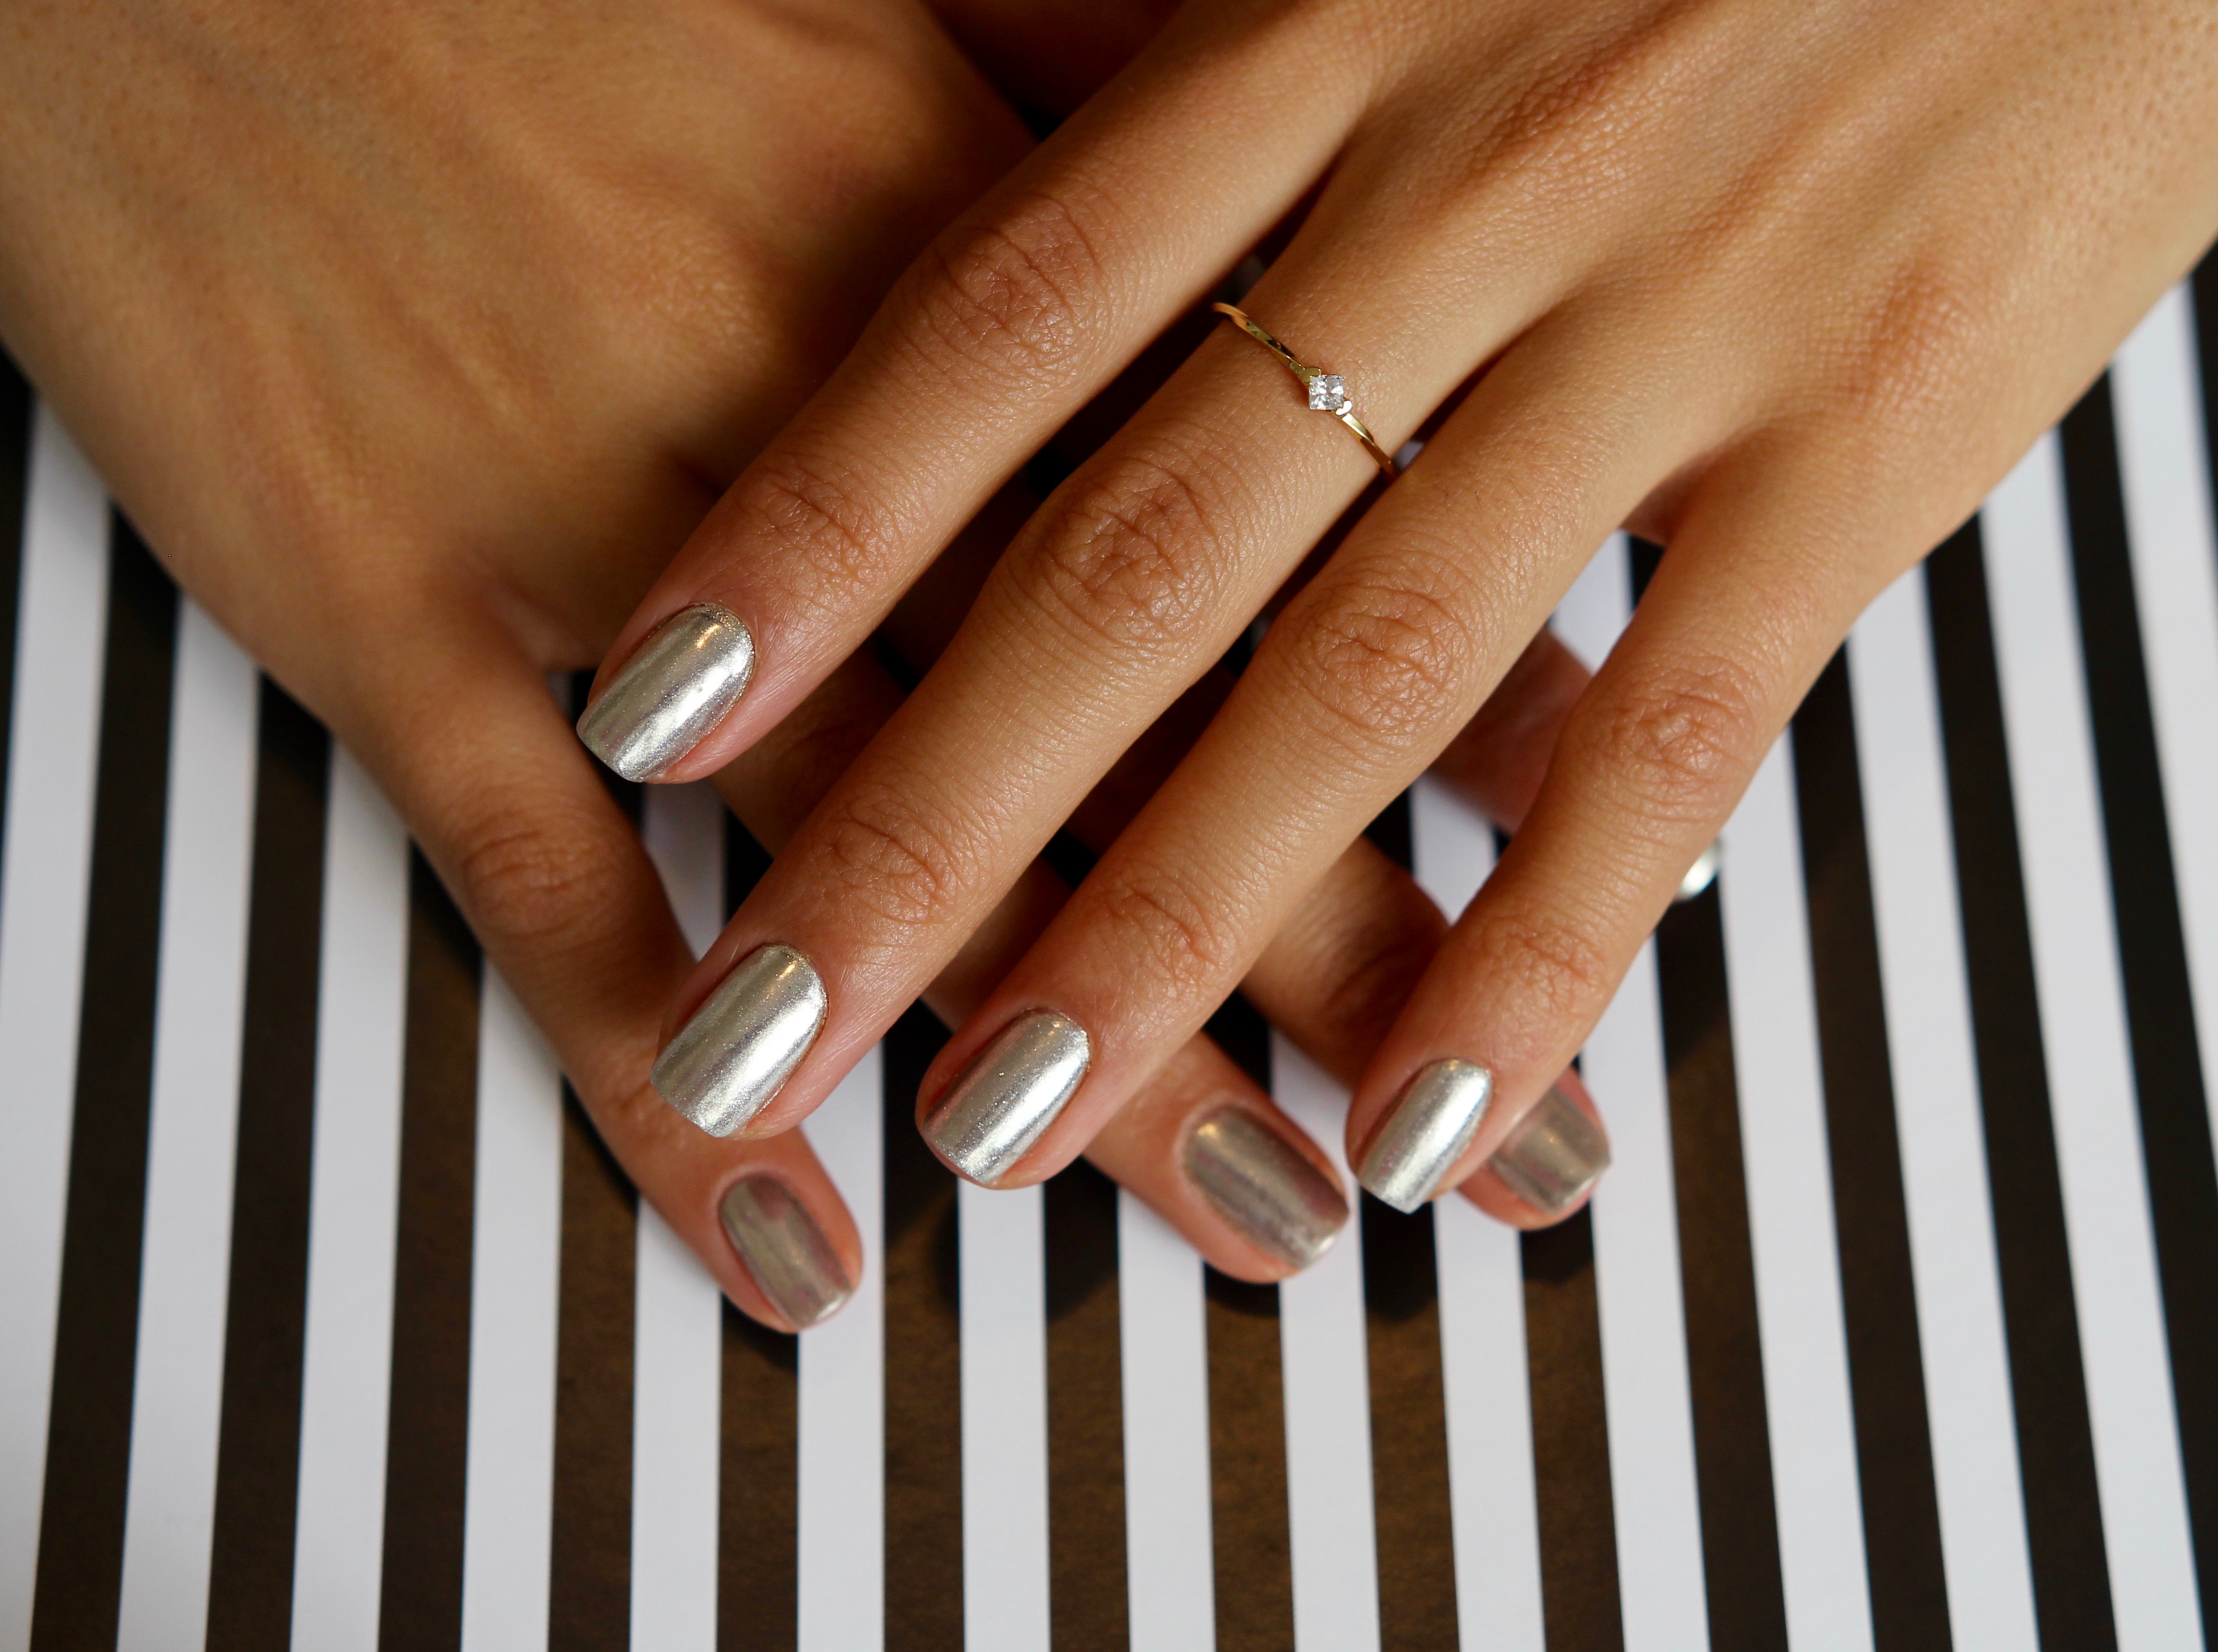 Chrome nails - wide 4